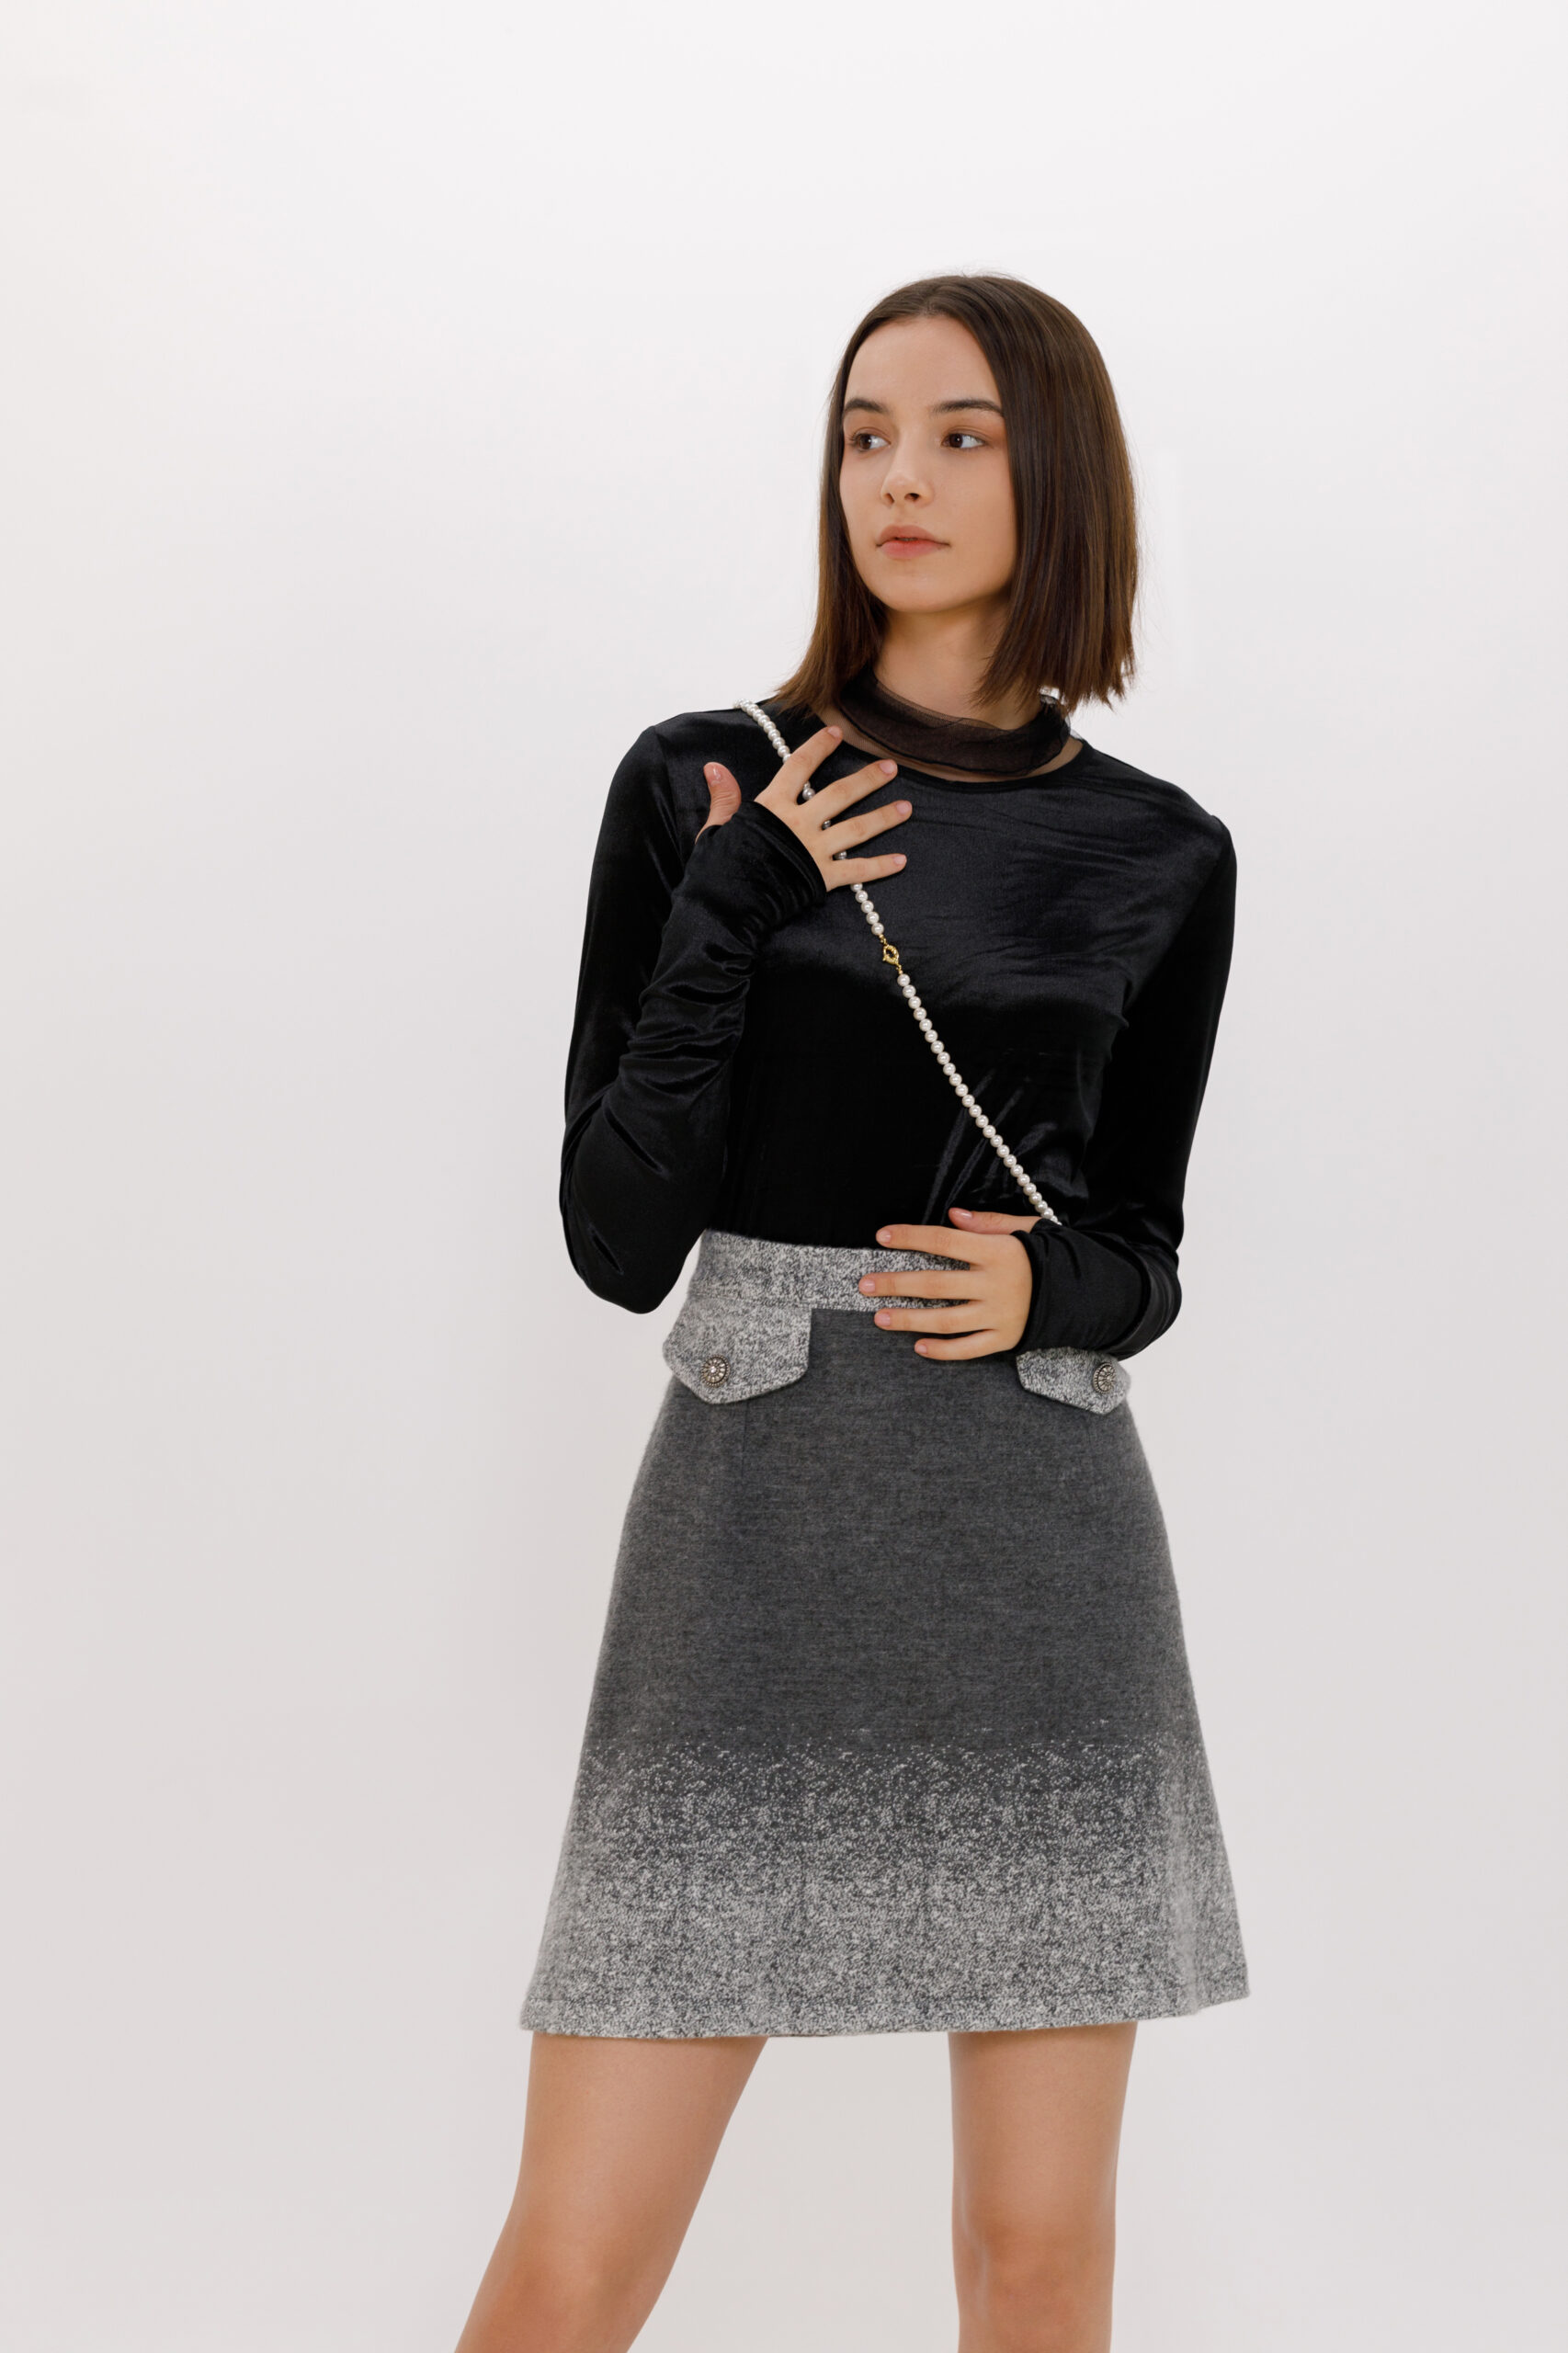 XENI 2 elegant turtleneck in black velvet with tulle collar. Natural fabrics, original design, handmade embroidery